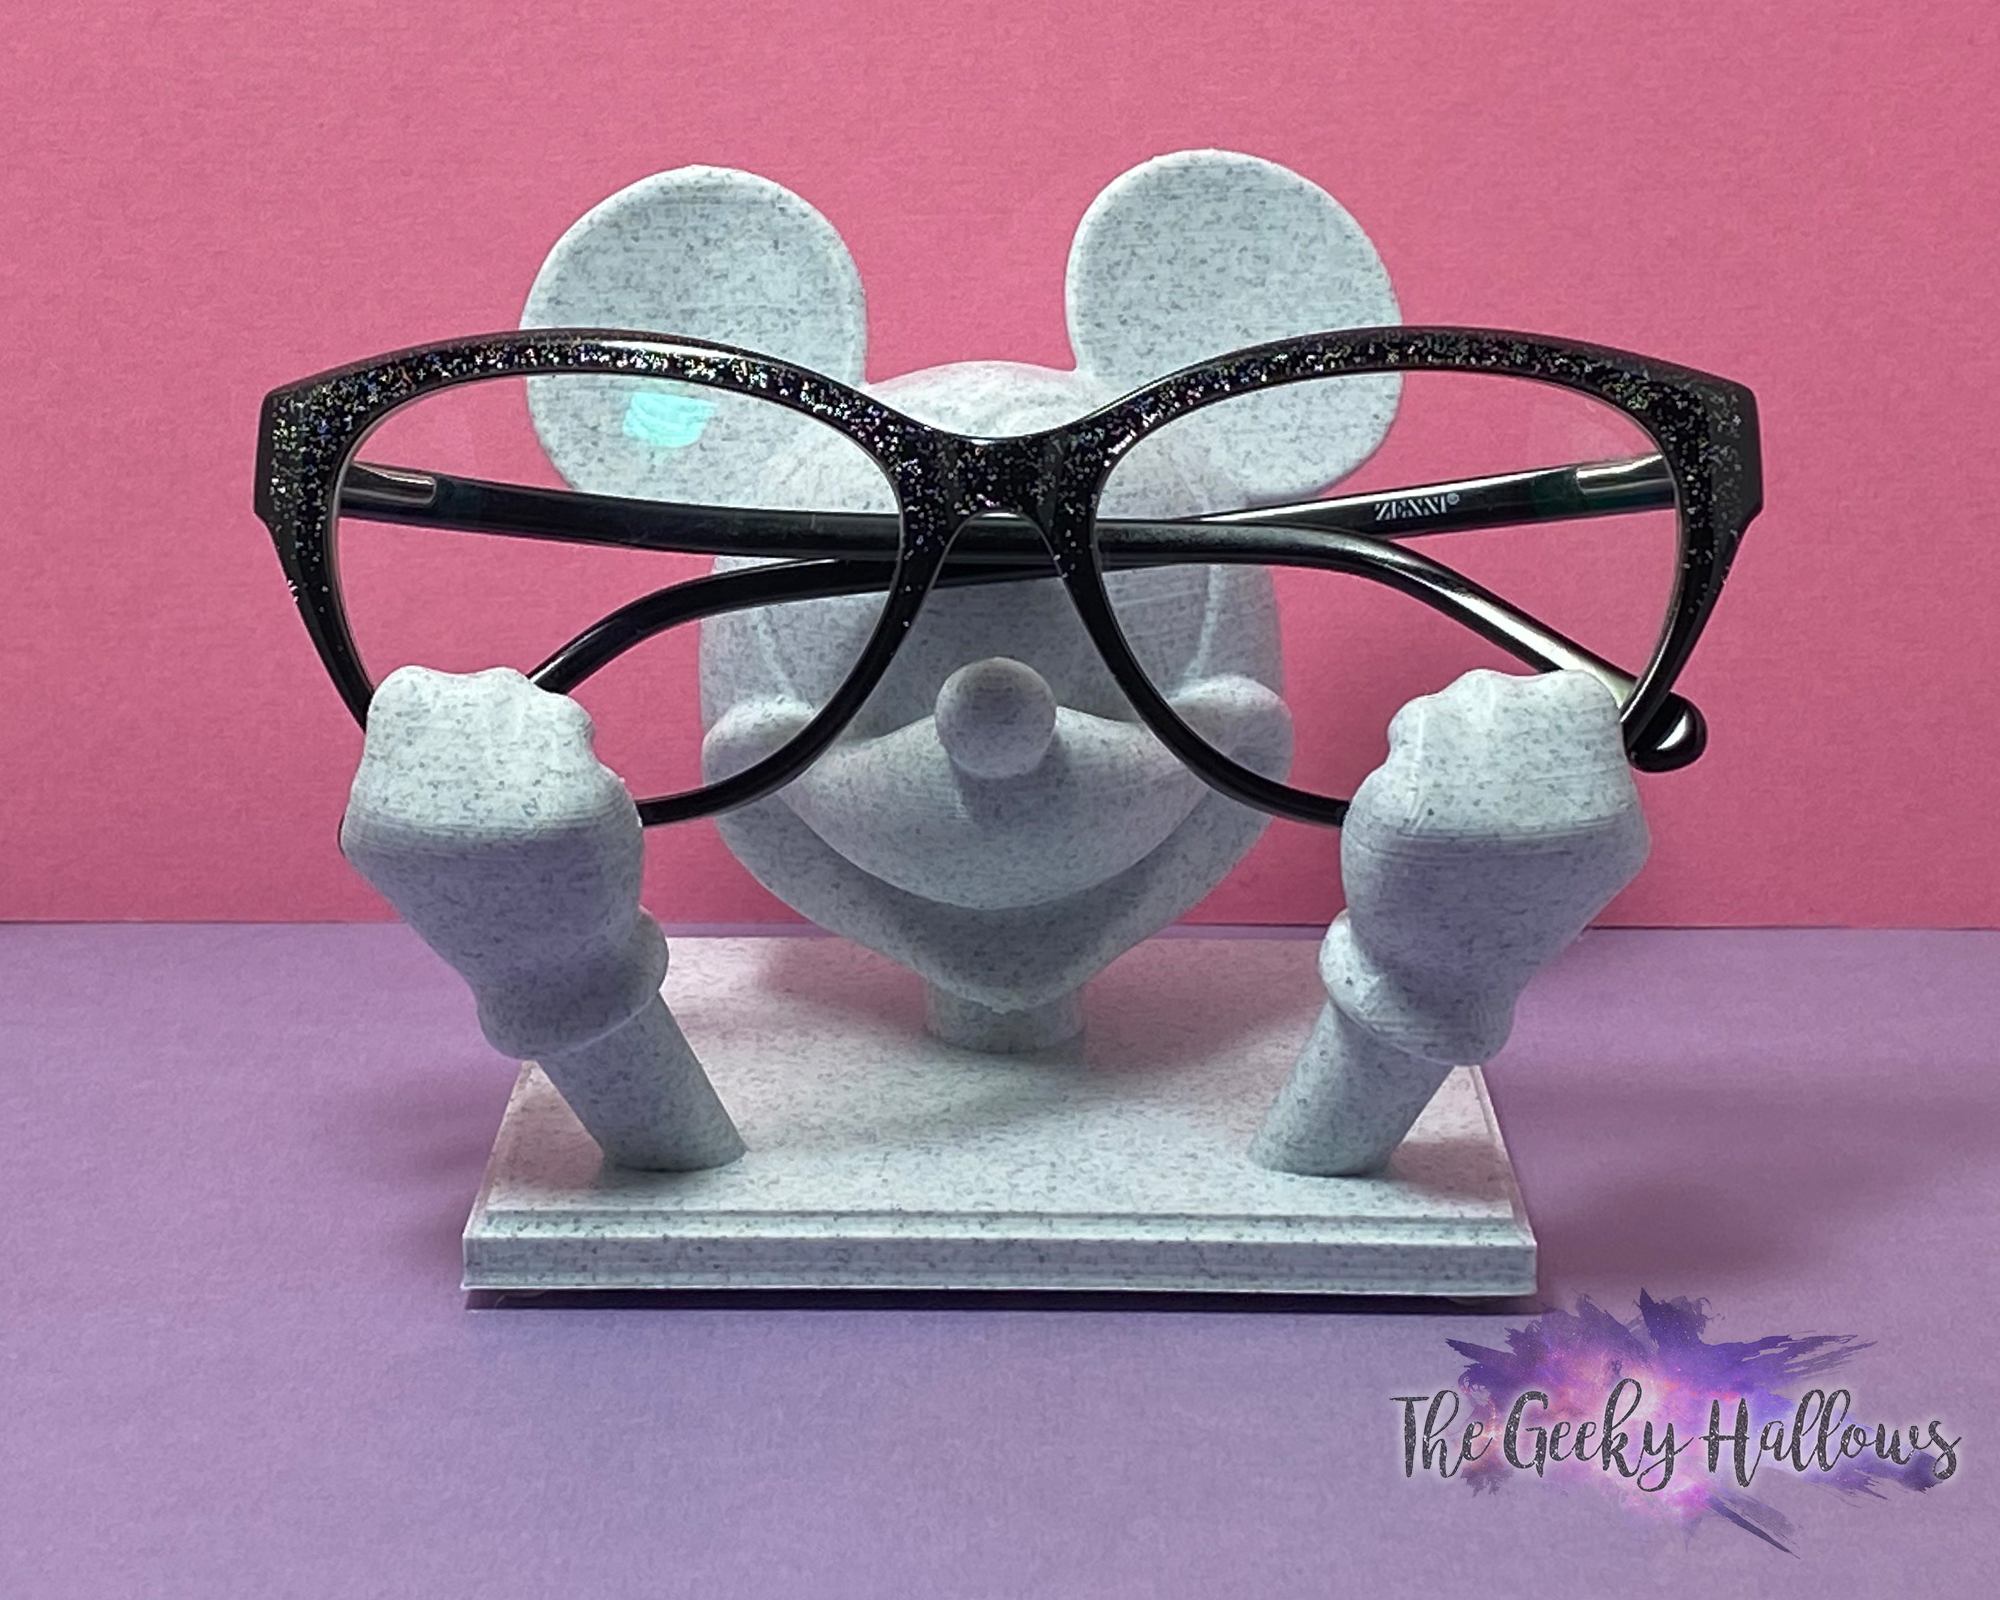 Disney Mickey Mouse Glasses Holder